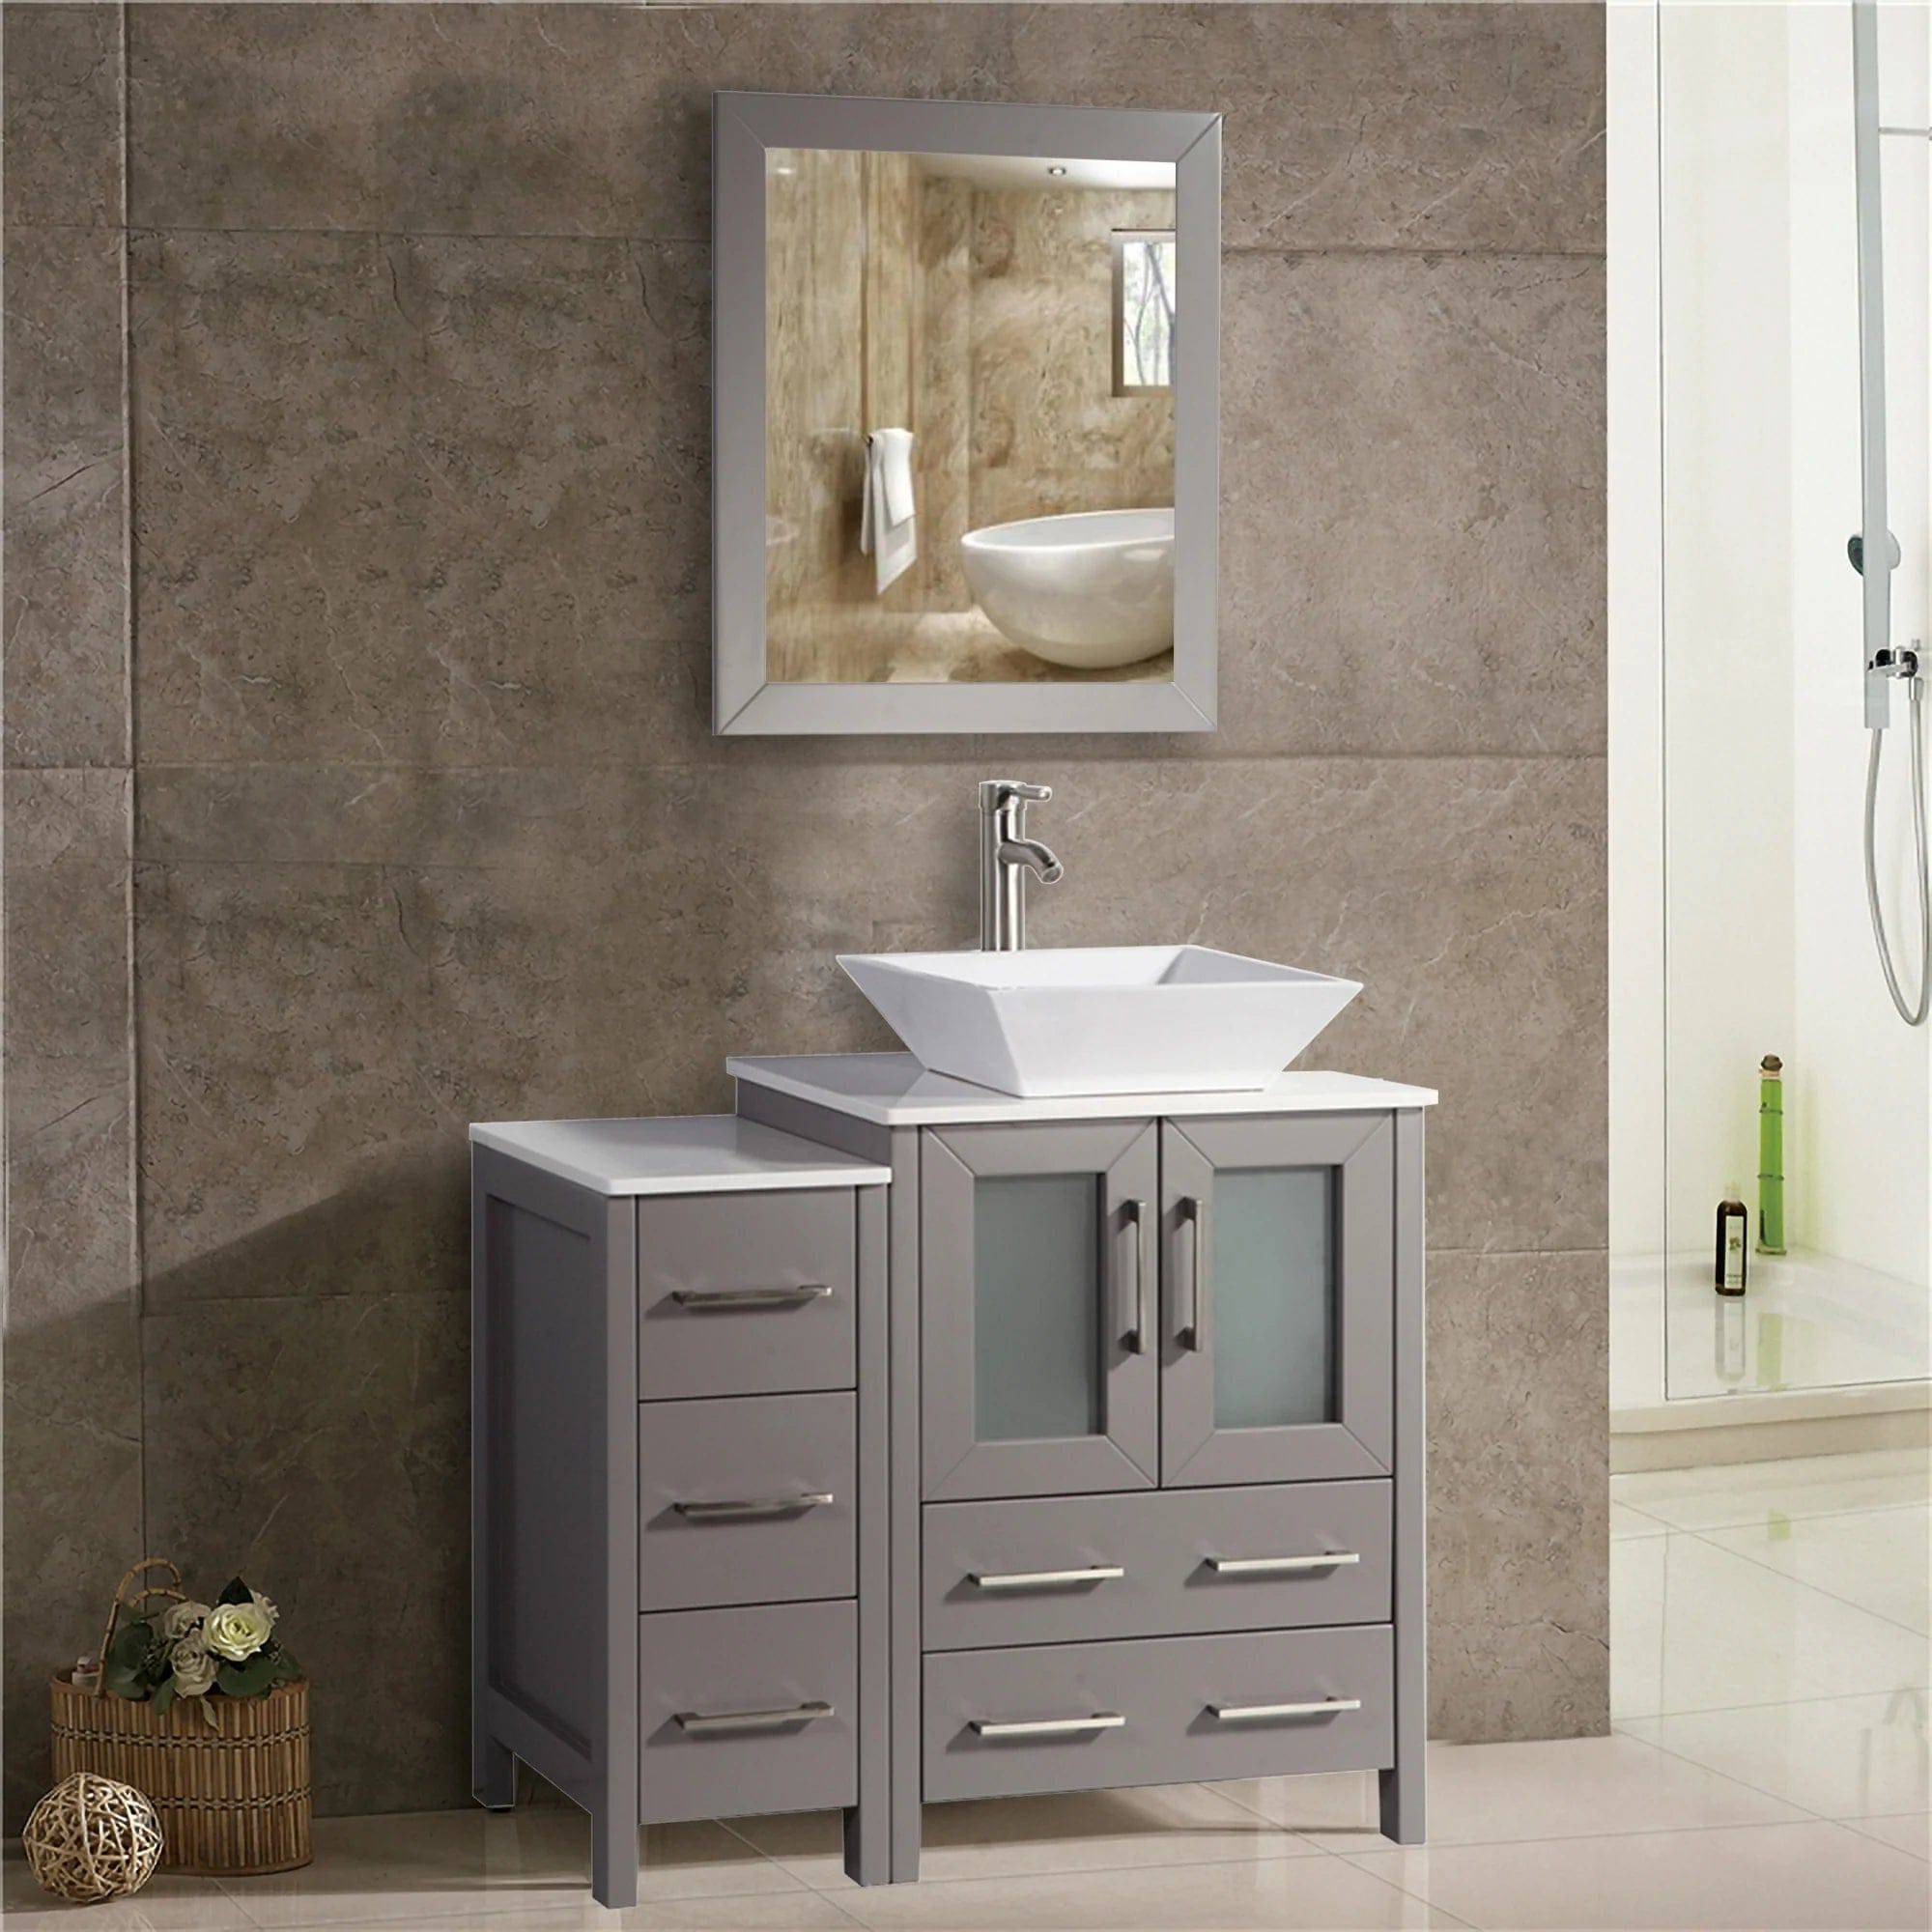 36 in. Single Sink Bathroom Vanity Combo Set in Gray